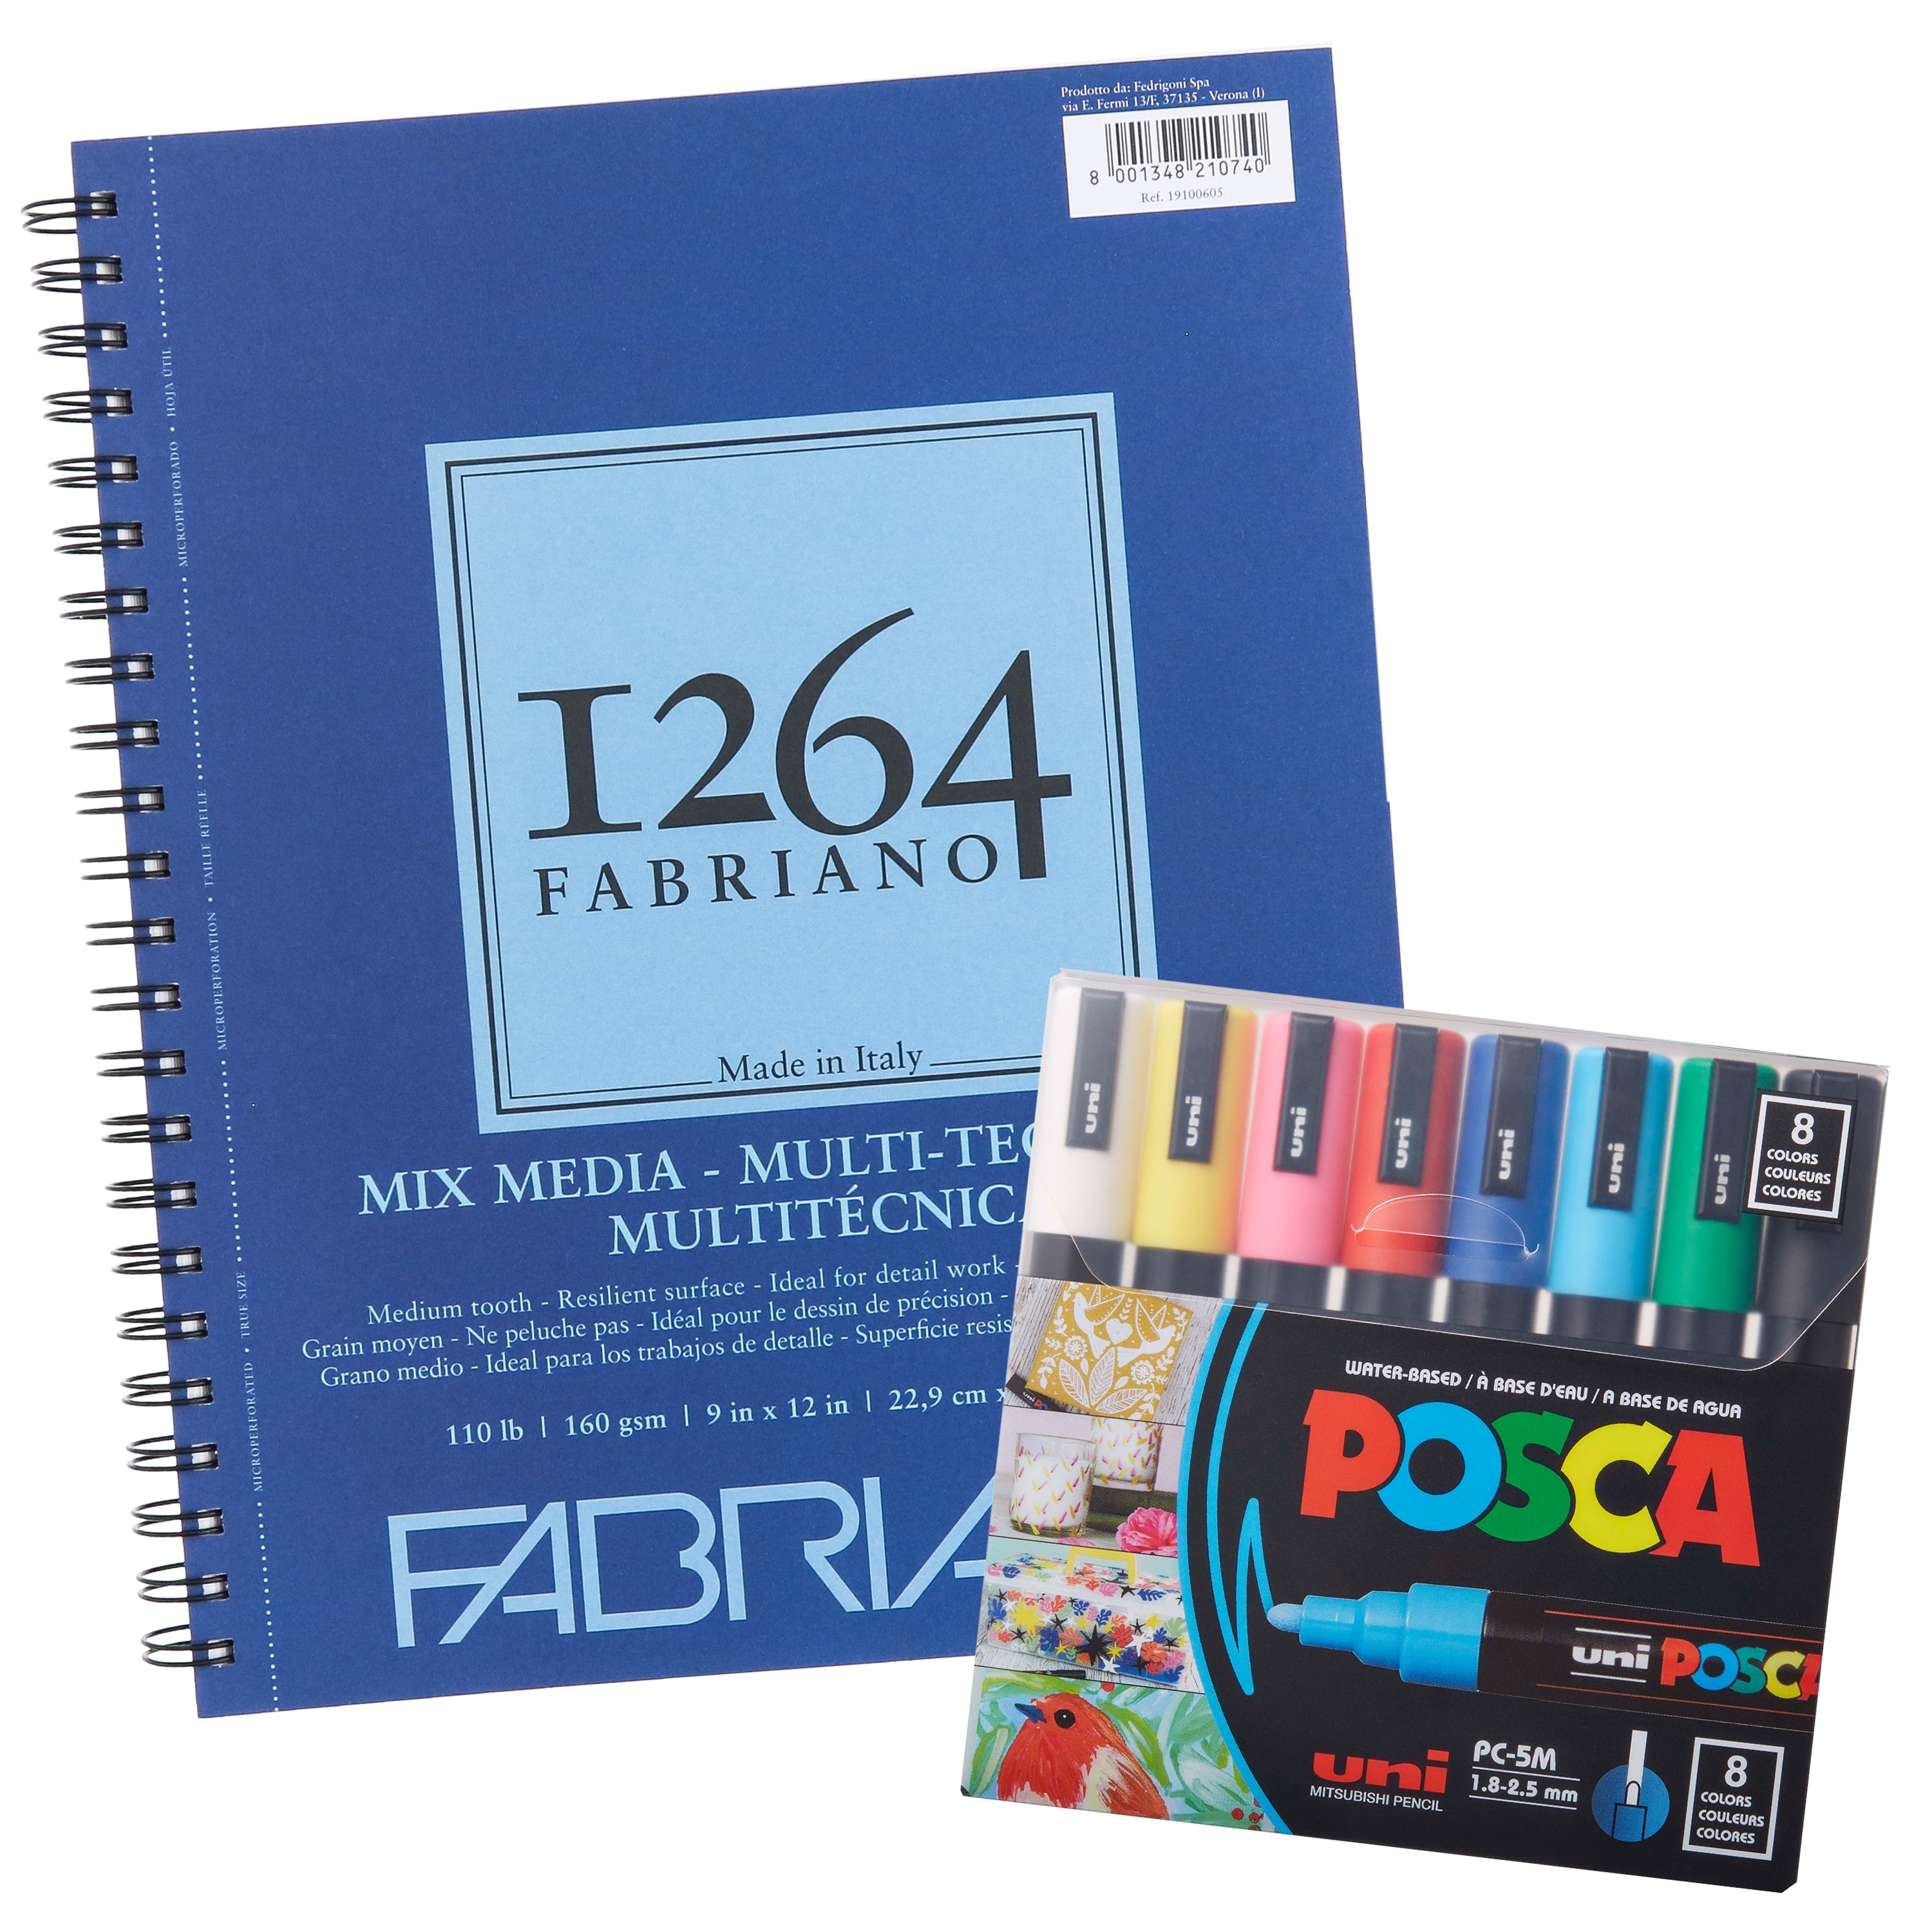 Fabriano 1264 Mixed Media Pad, and POSCA Marker 8-Color PC-5M Medium Pt Bundle